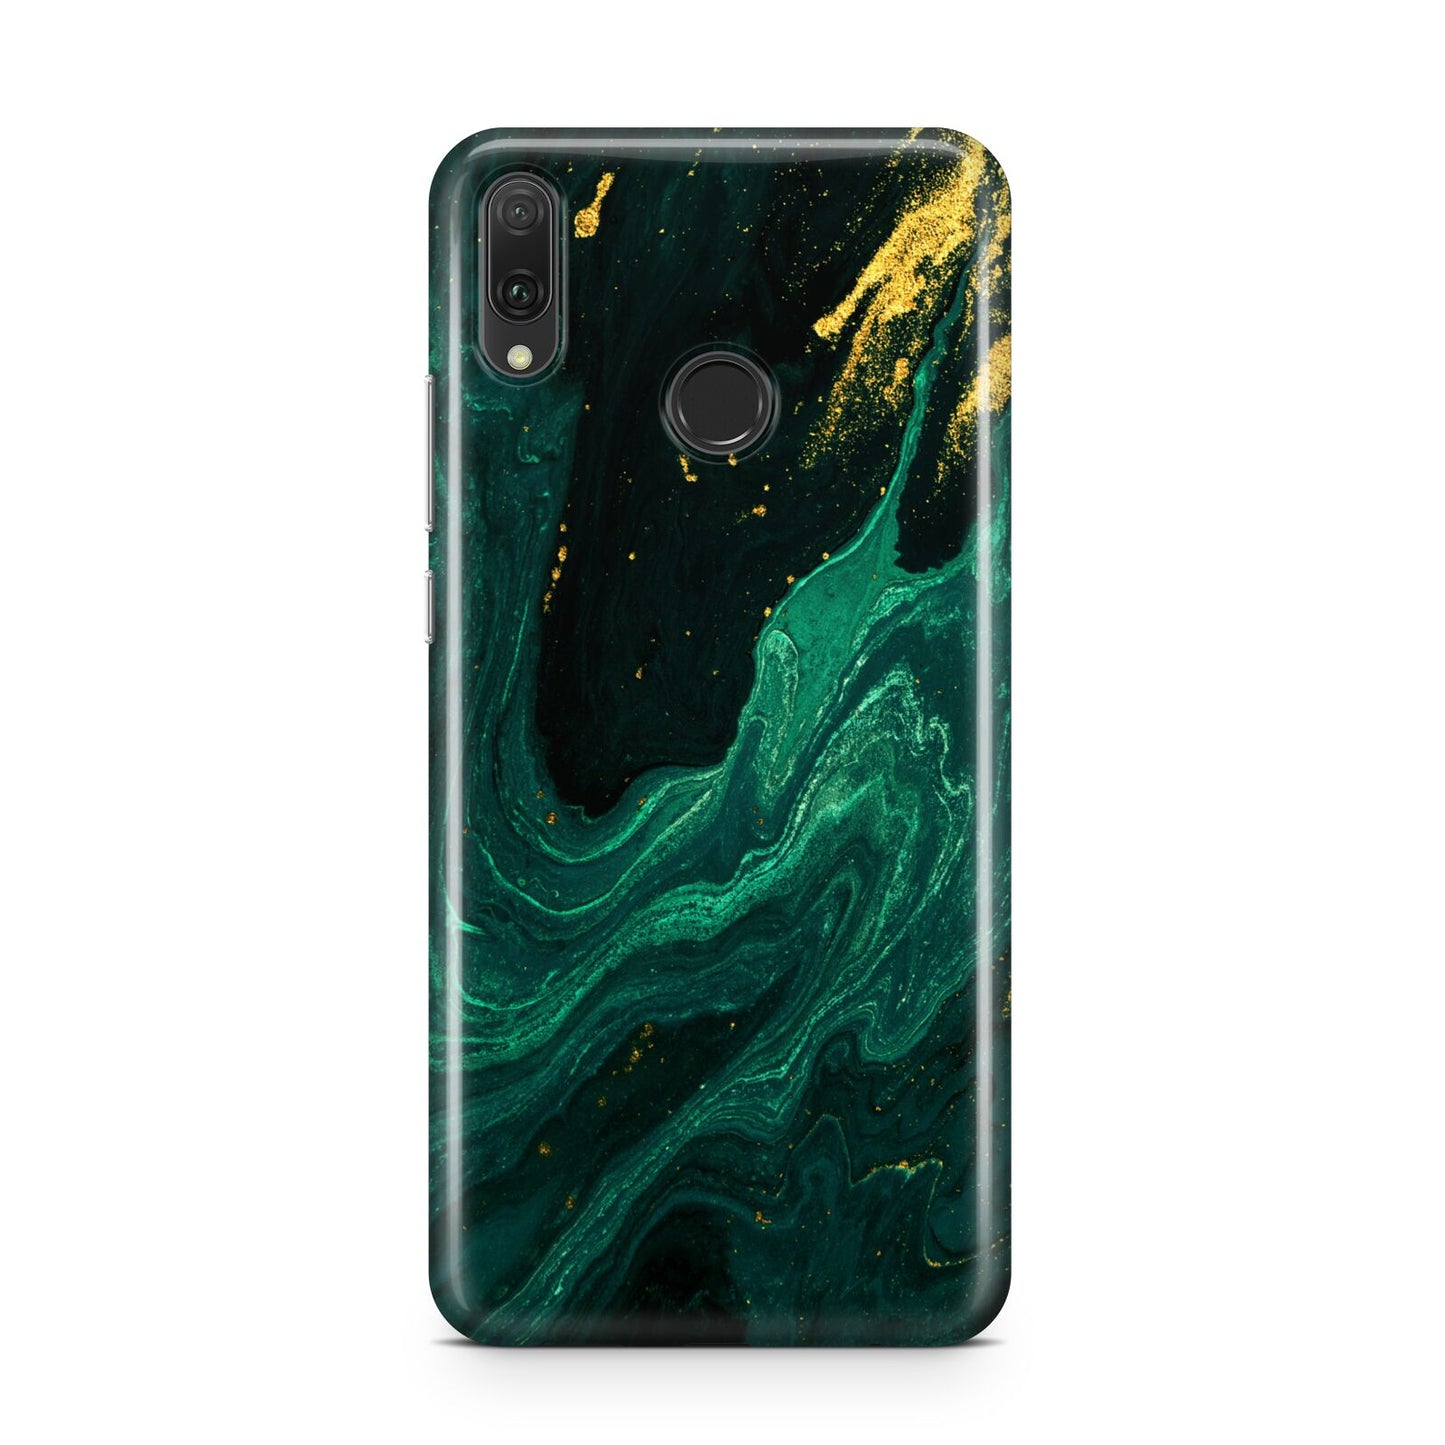 Emerald Green Huawei Y9 2019